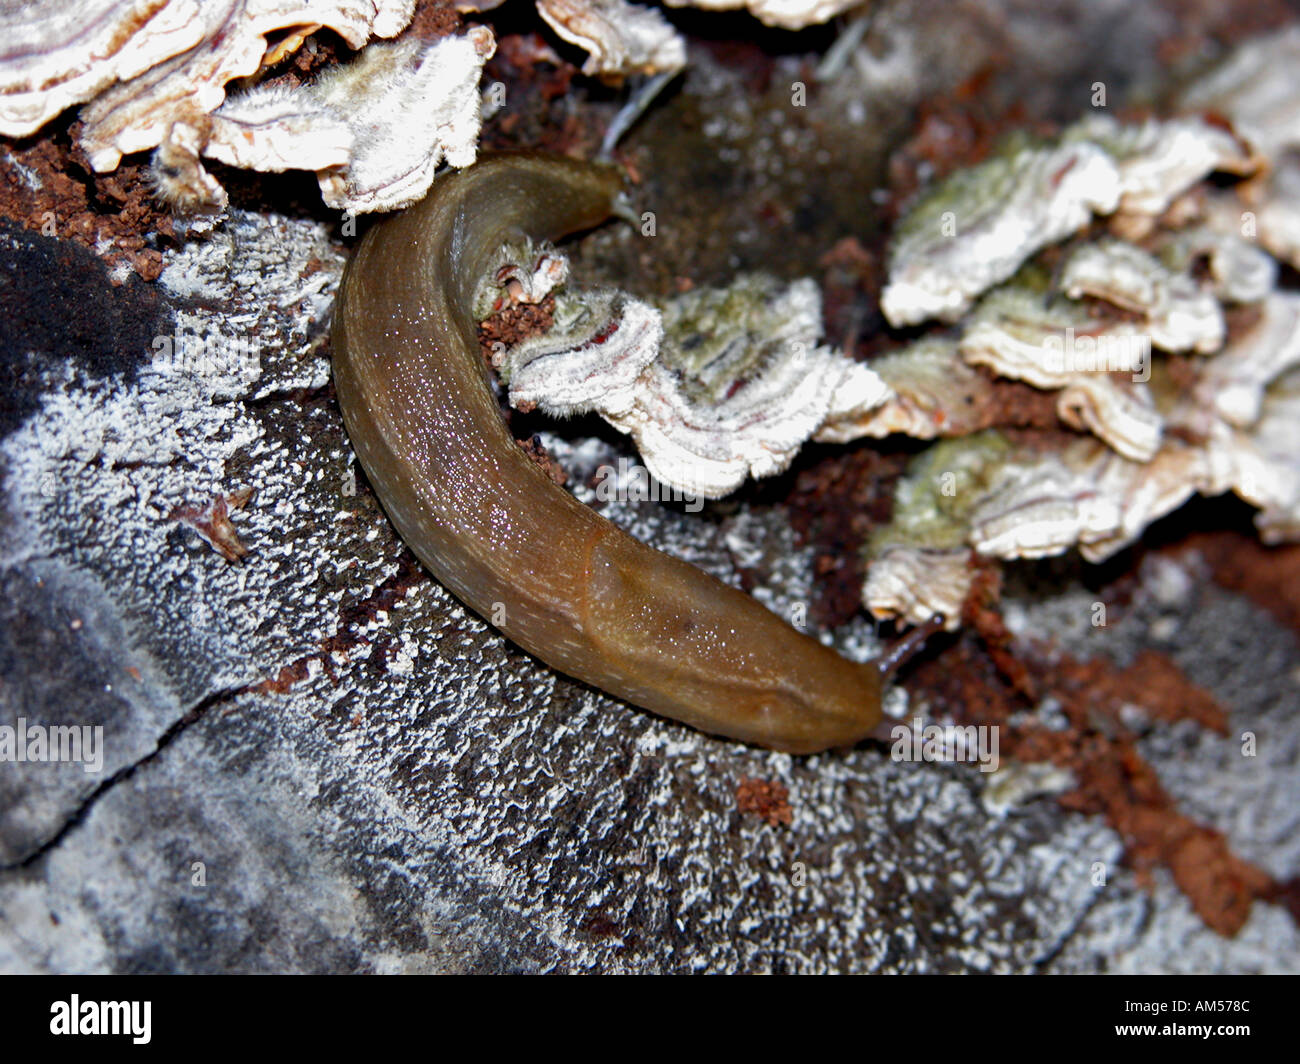 Spanish Slug (Arion lusitanicus) on lichen covered log, Spain, Stock Photo